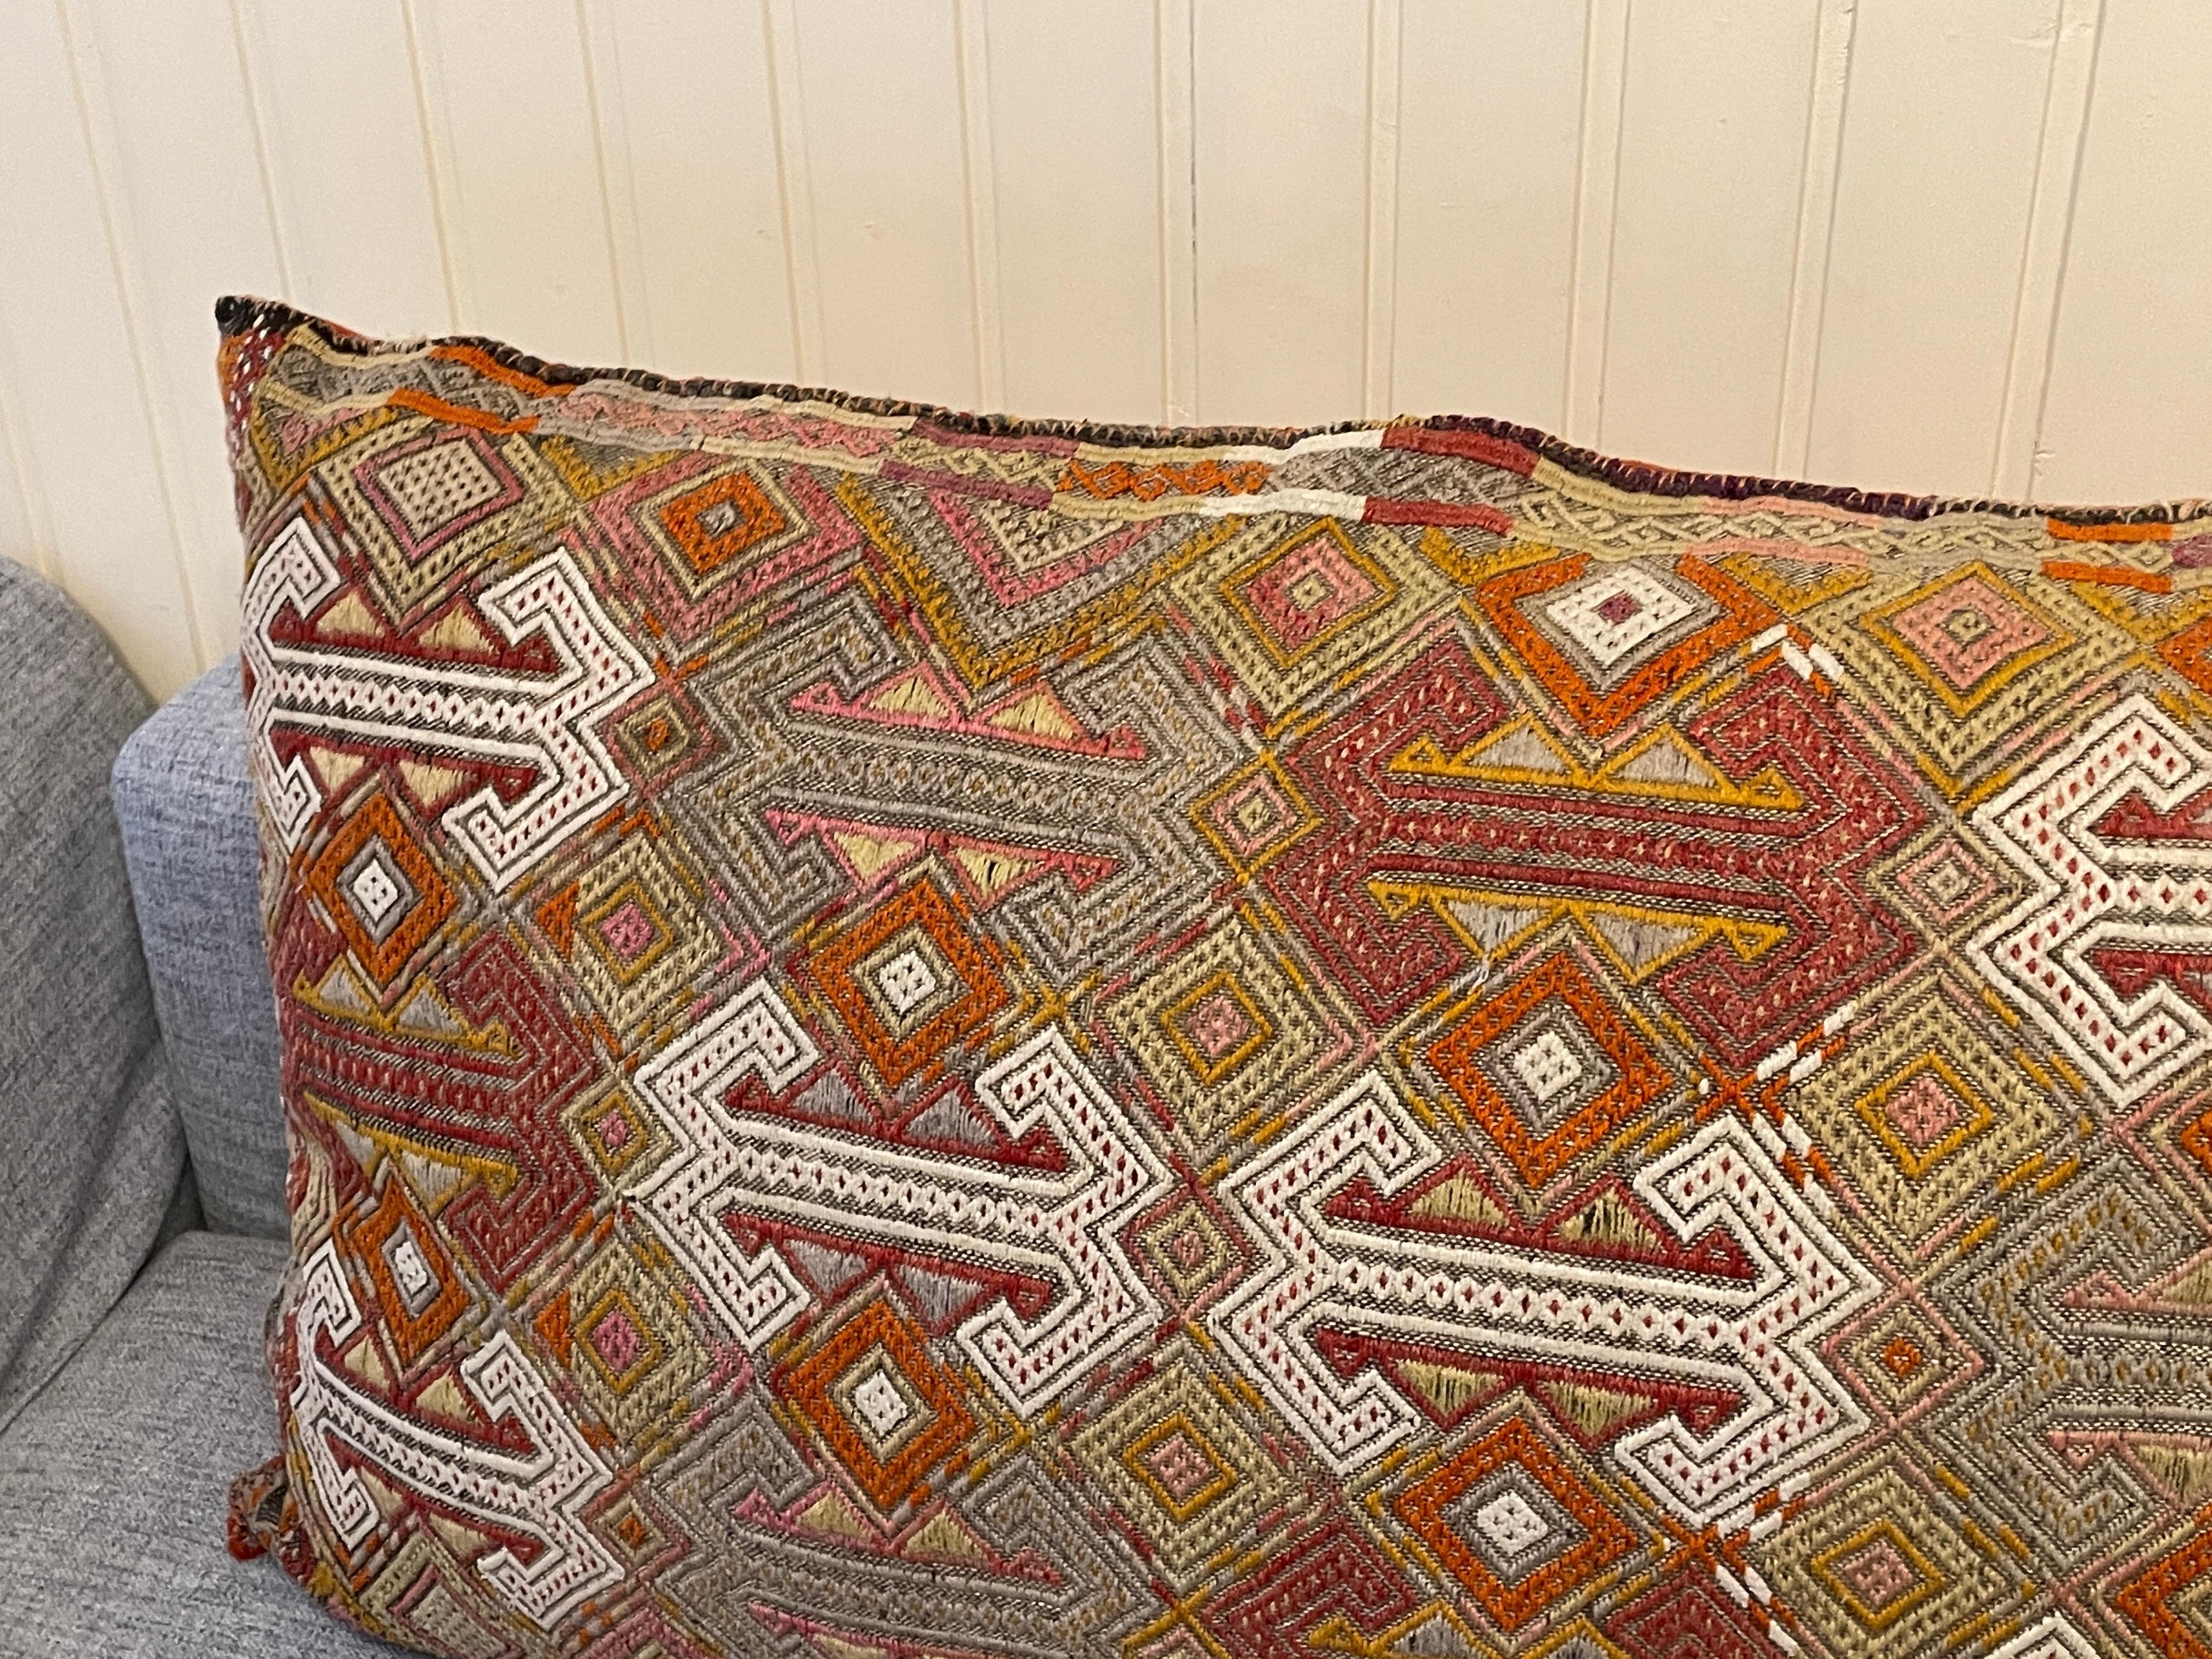 Wool Stunning Large Gypsy Turkish Oriental Salt Bag or Rug Embroidery Pillow